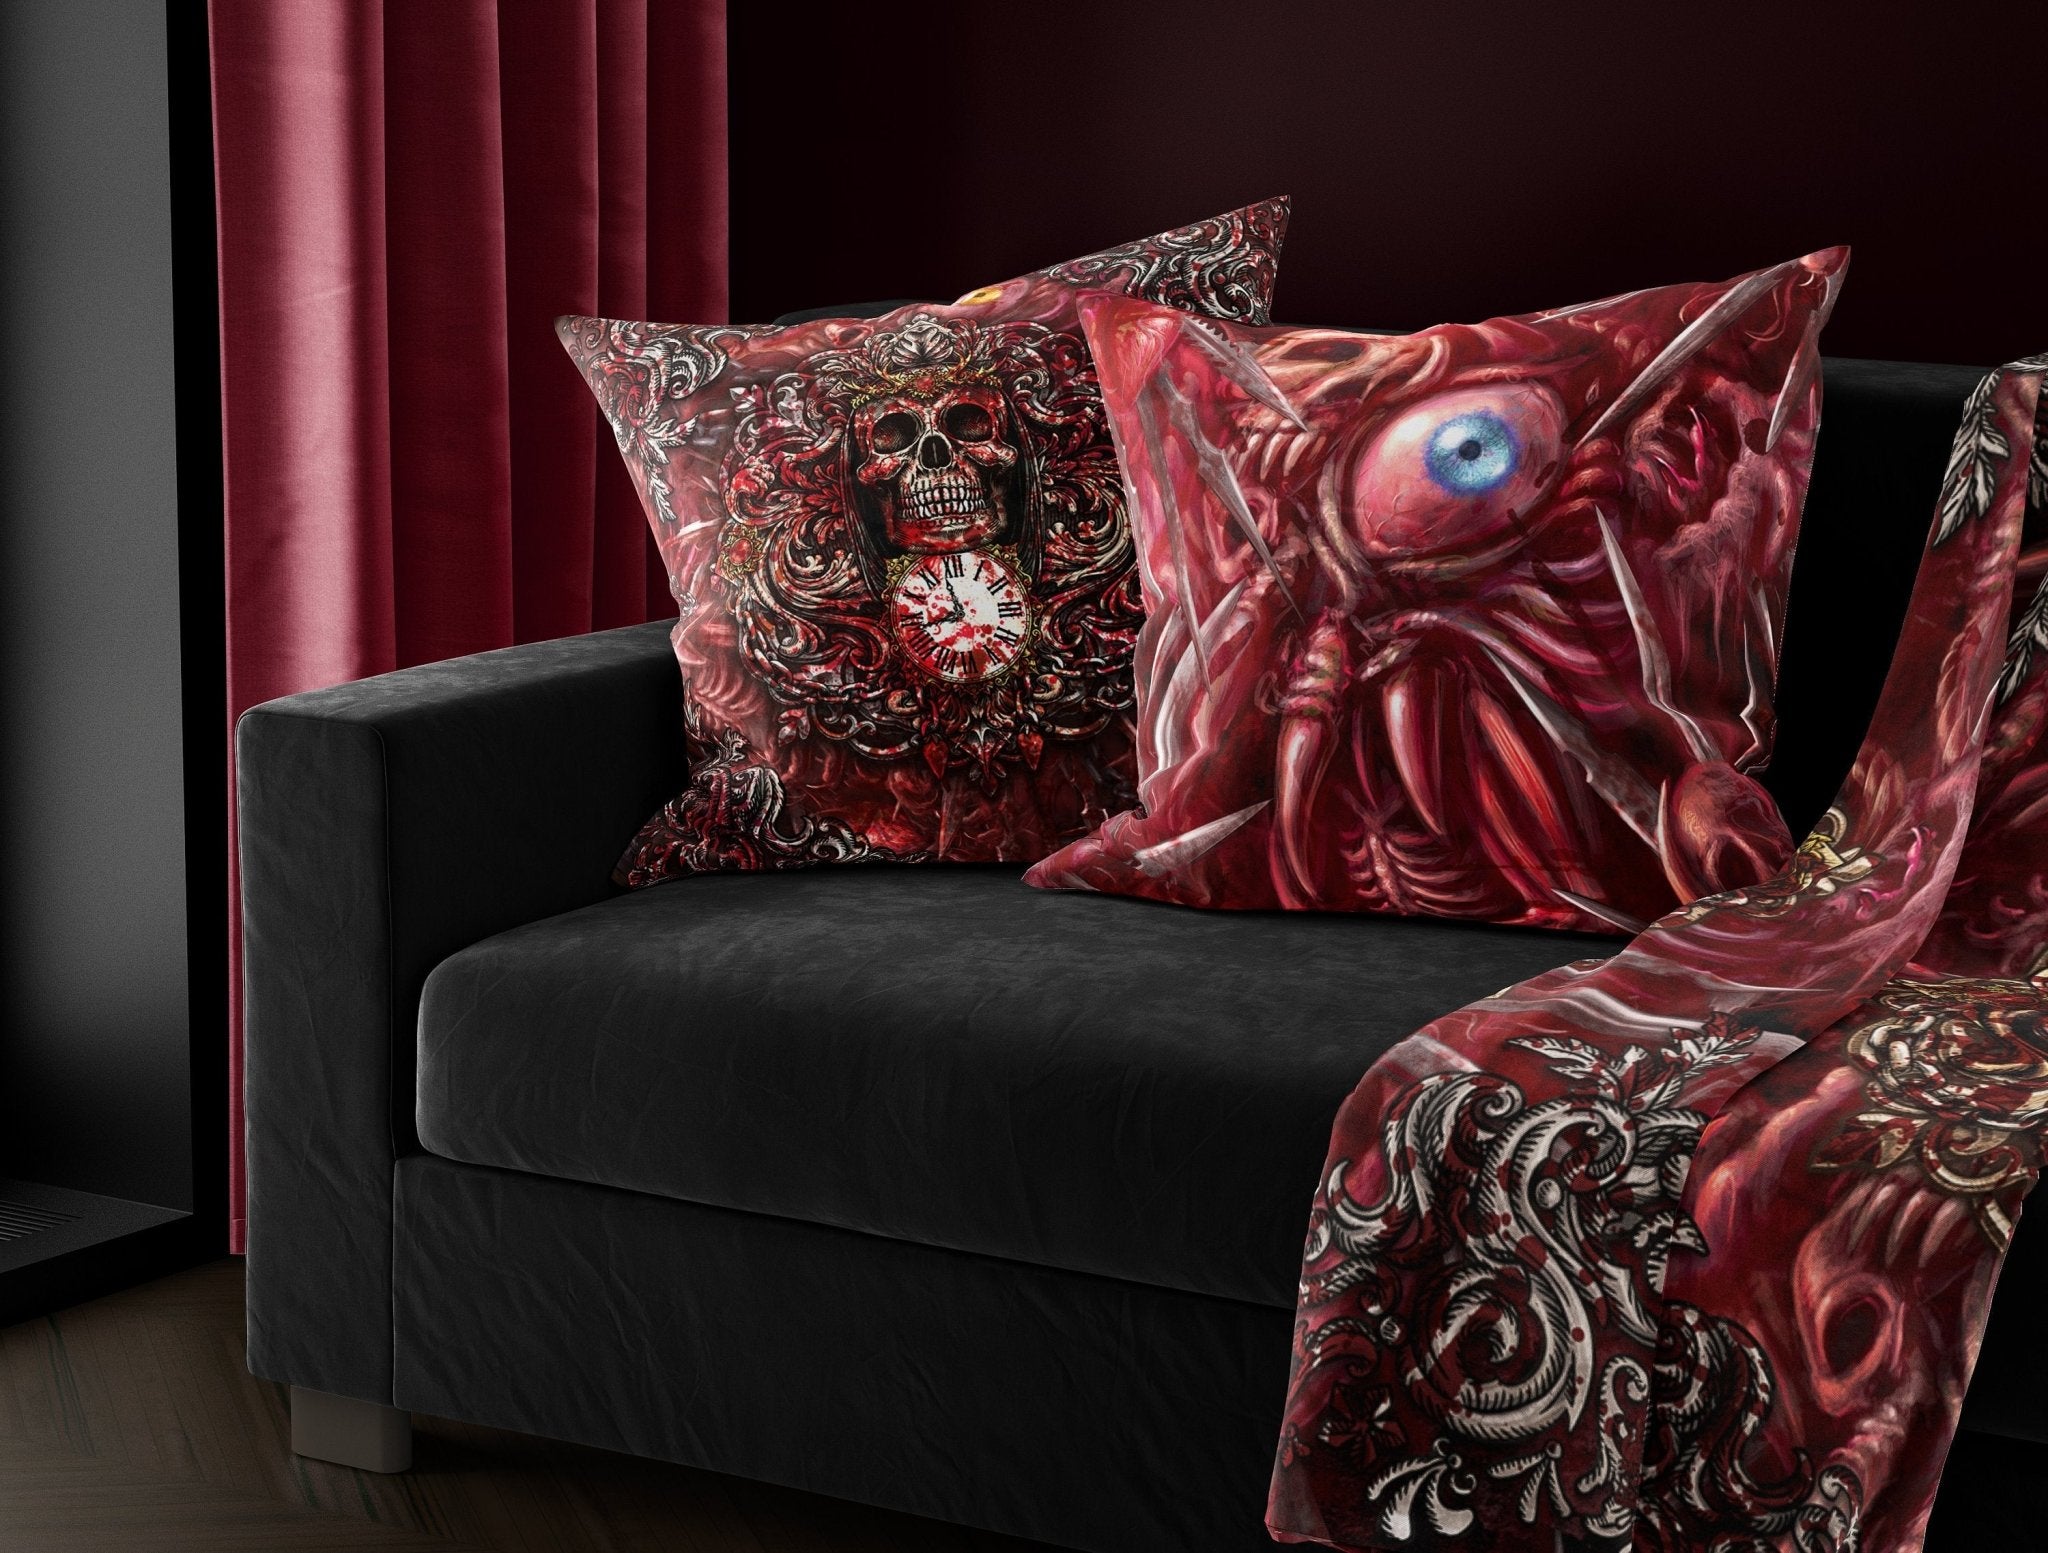 Horror Throw Pillow, Decorative Accent Cushion, Grim Reaper, Skull Art, Halloween, Alternative Home - Gore & Blood - Abysm Internal